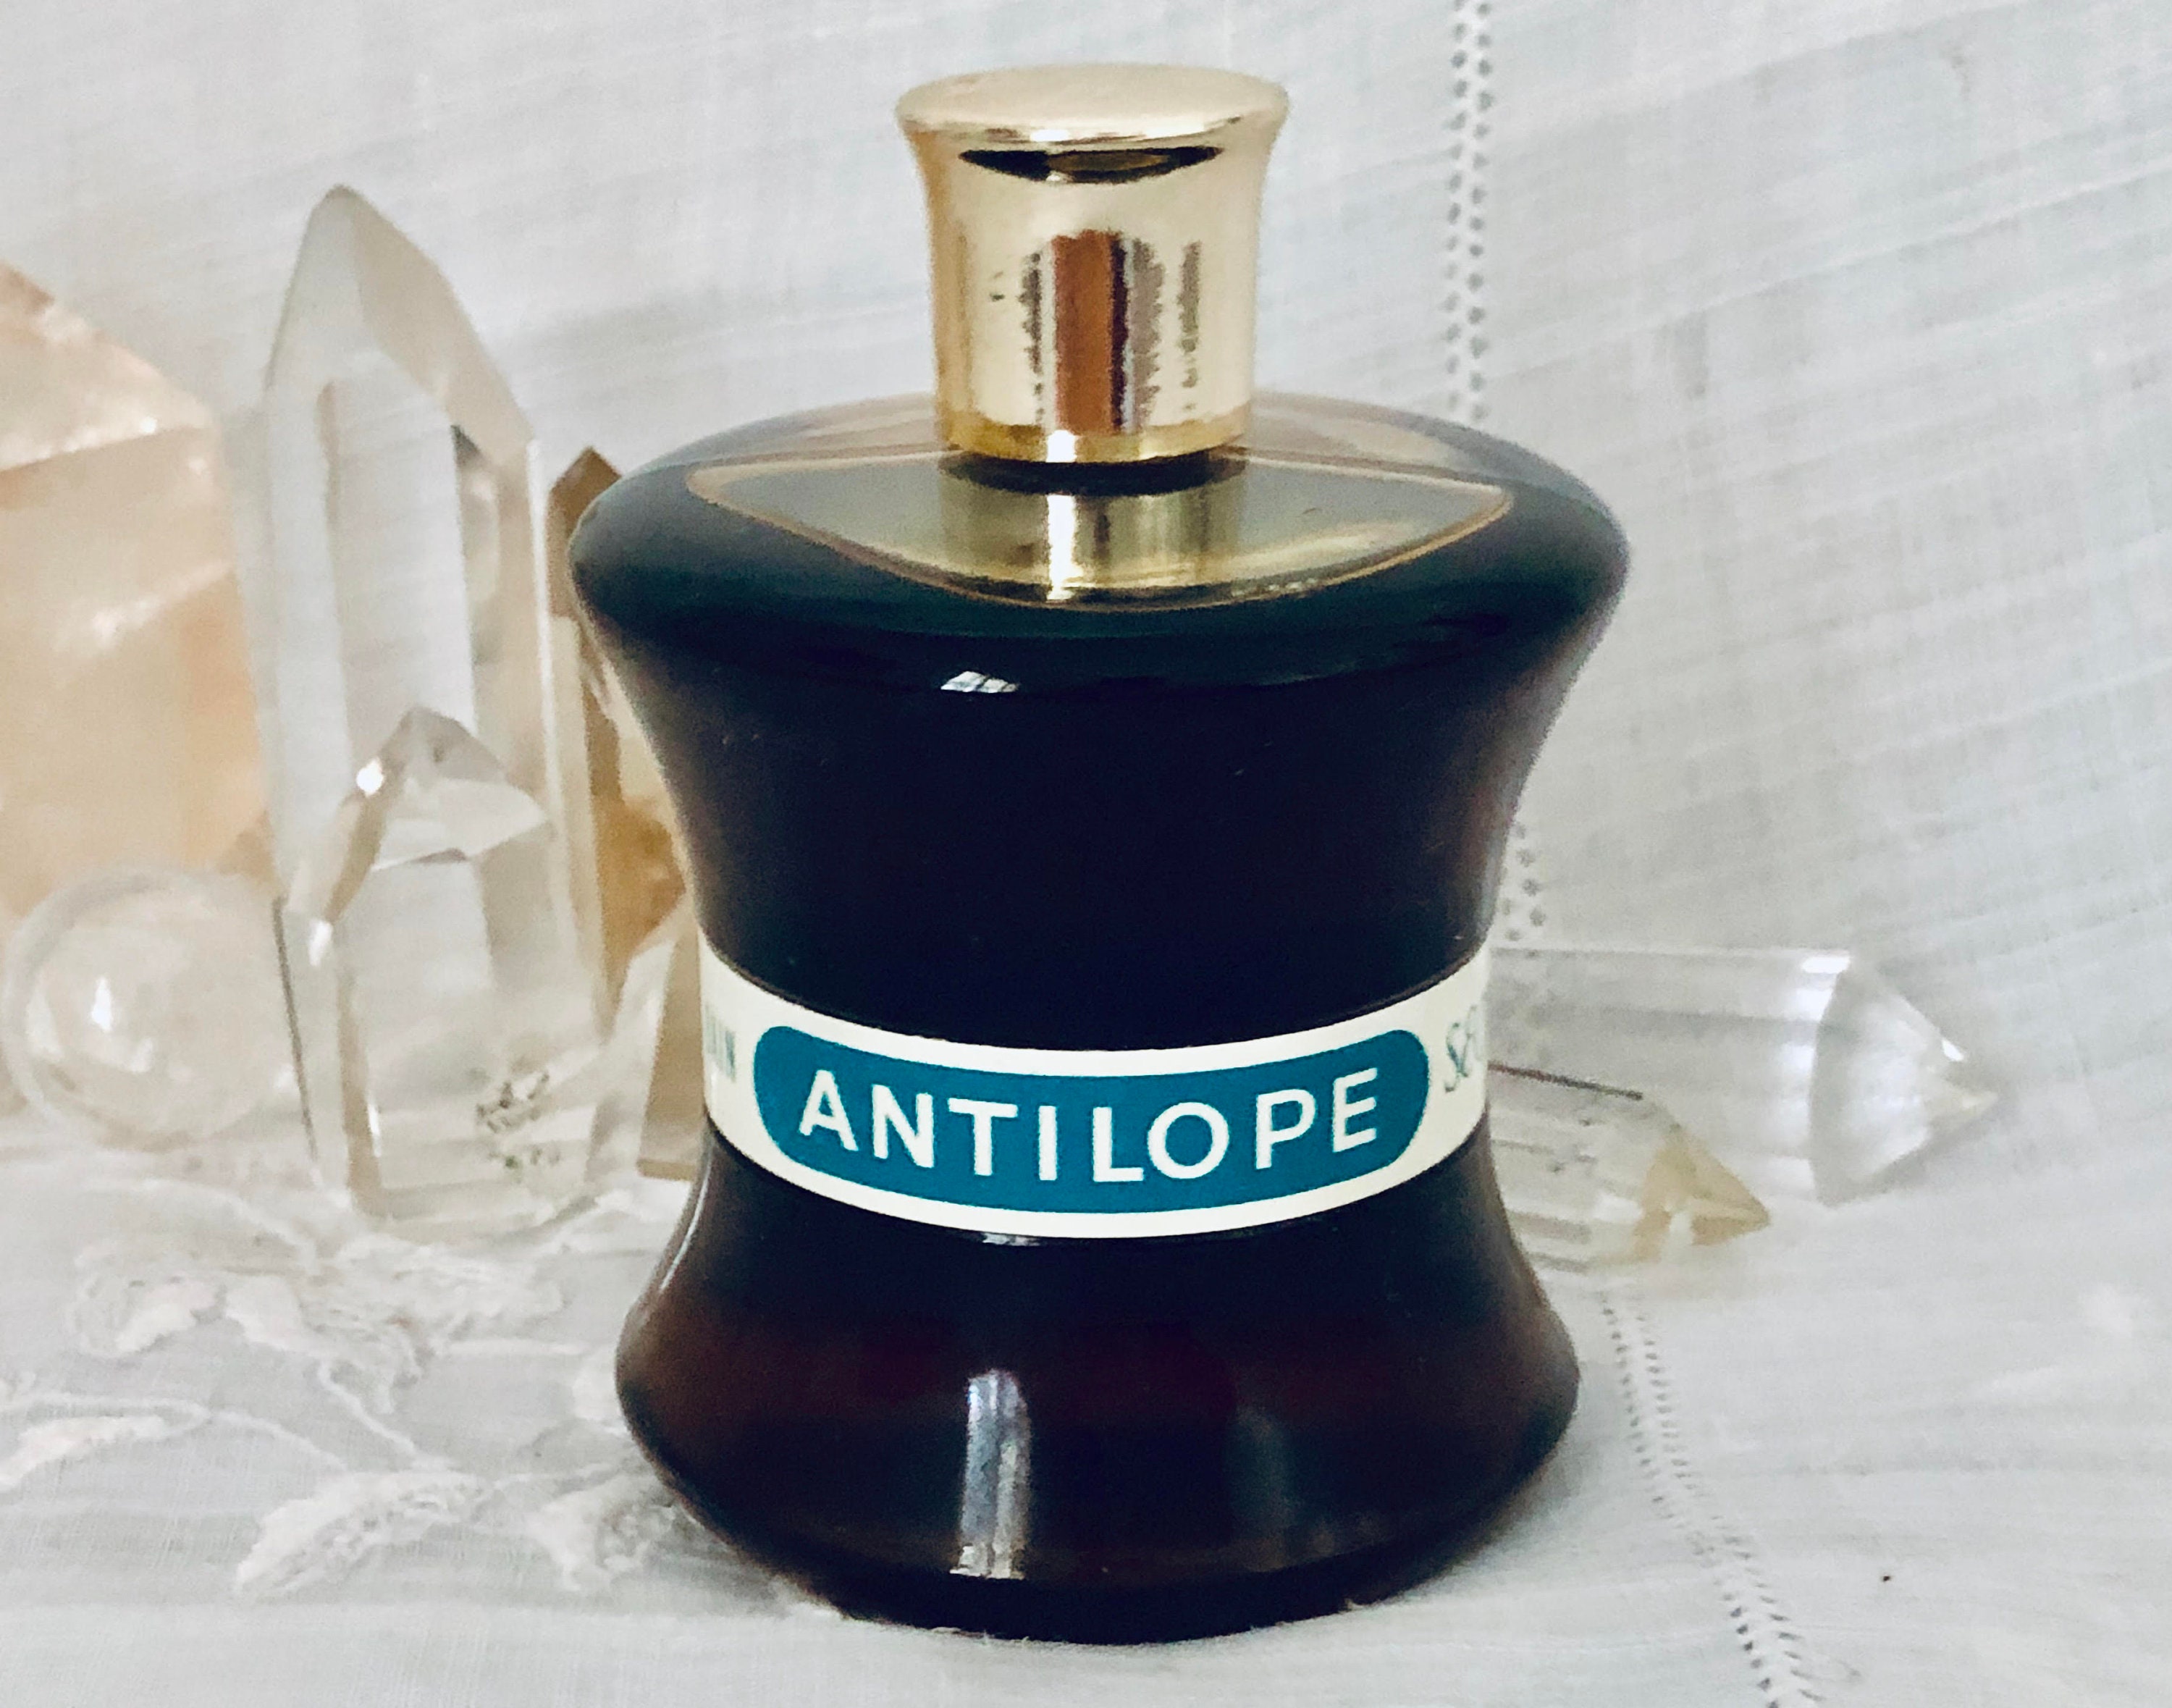 Chanel Miniature Perfume Gift Set 7.5ml x 8pcs – The Fragrance Shop Inc